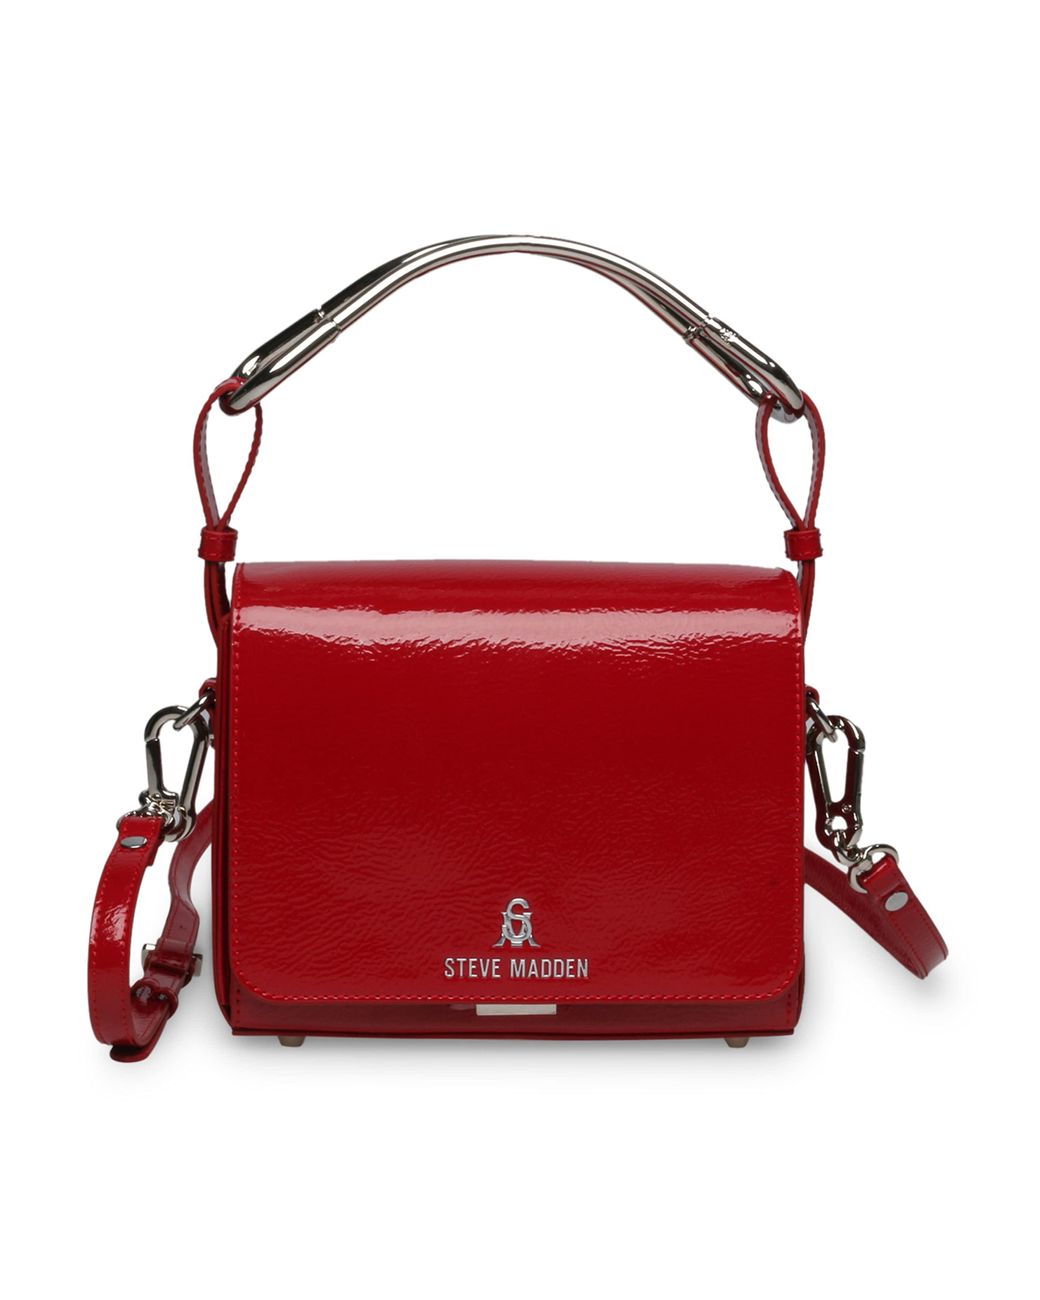 STEVE MADDEN Rhinestone BGLOW-R Faux Leather CROSSBODY Bag RED | eBay